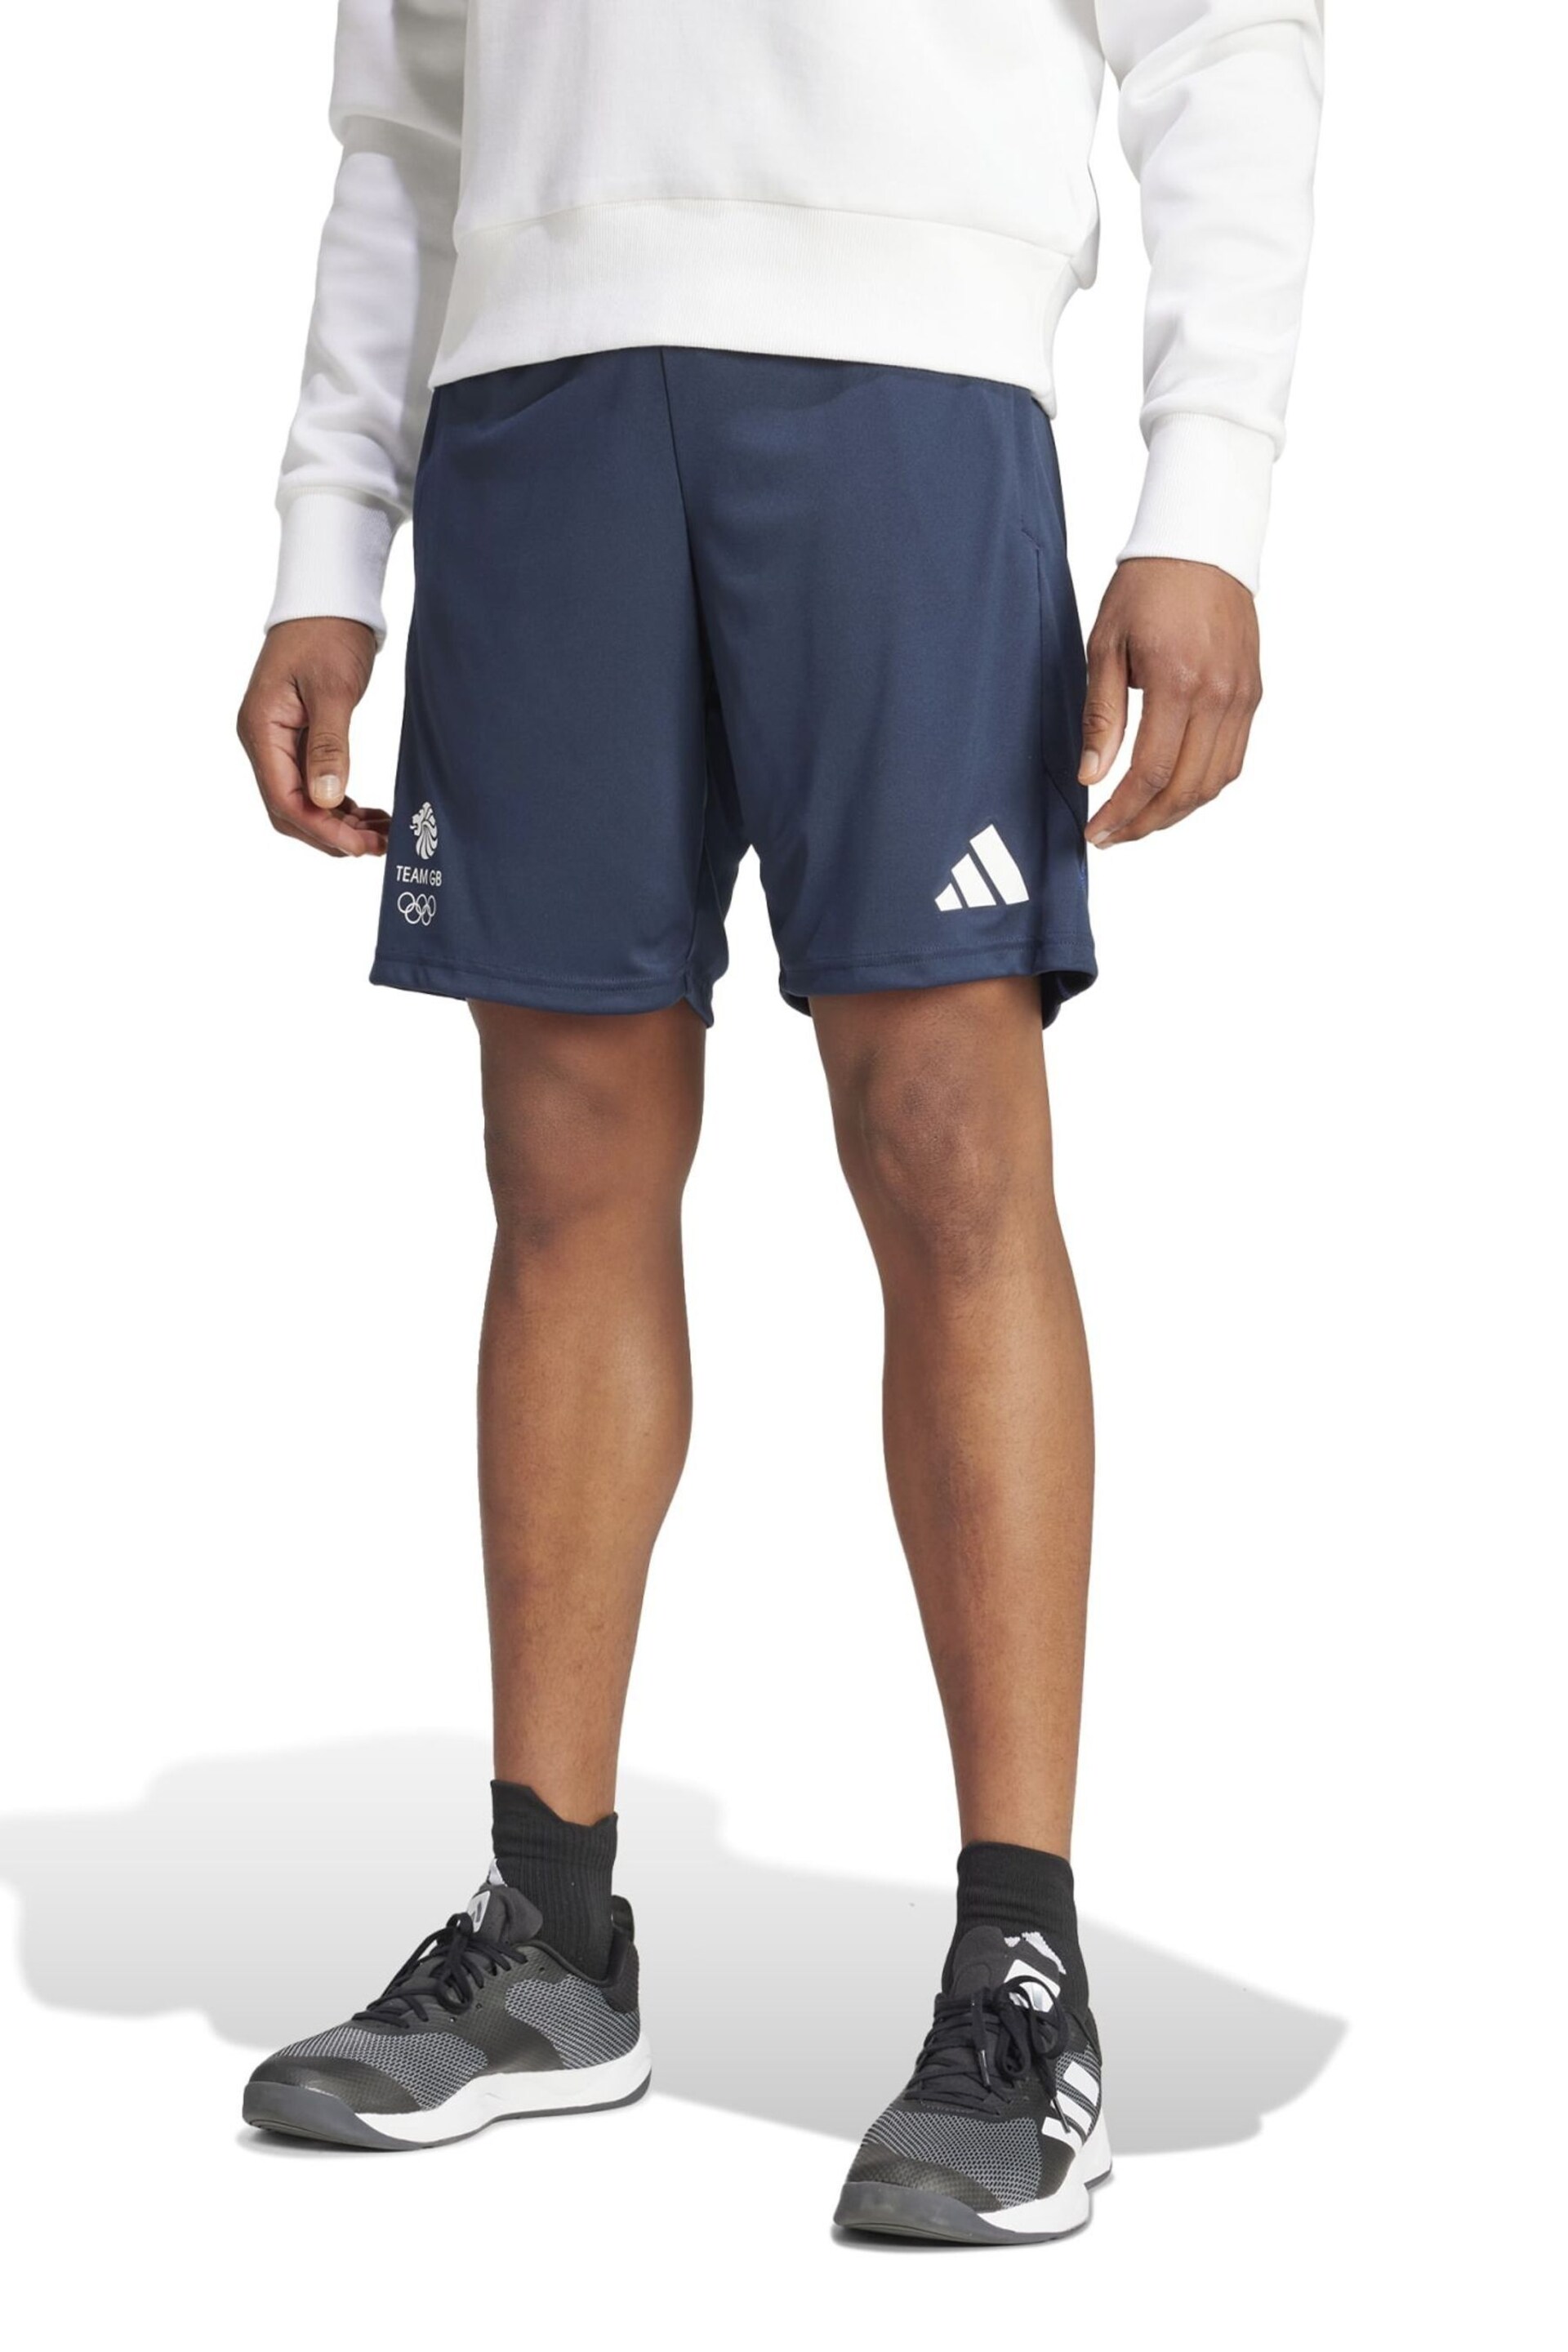 adidas Blue Team GB Training Shorts - Image 1 of 3